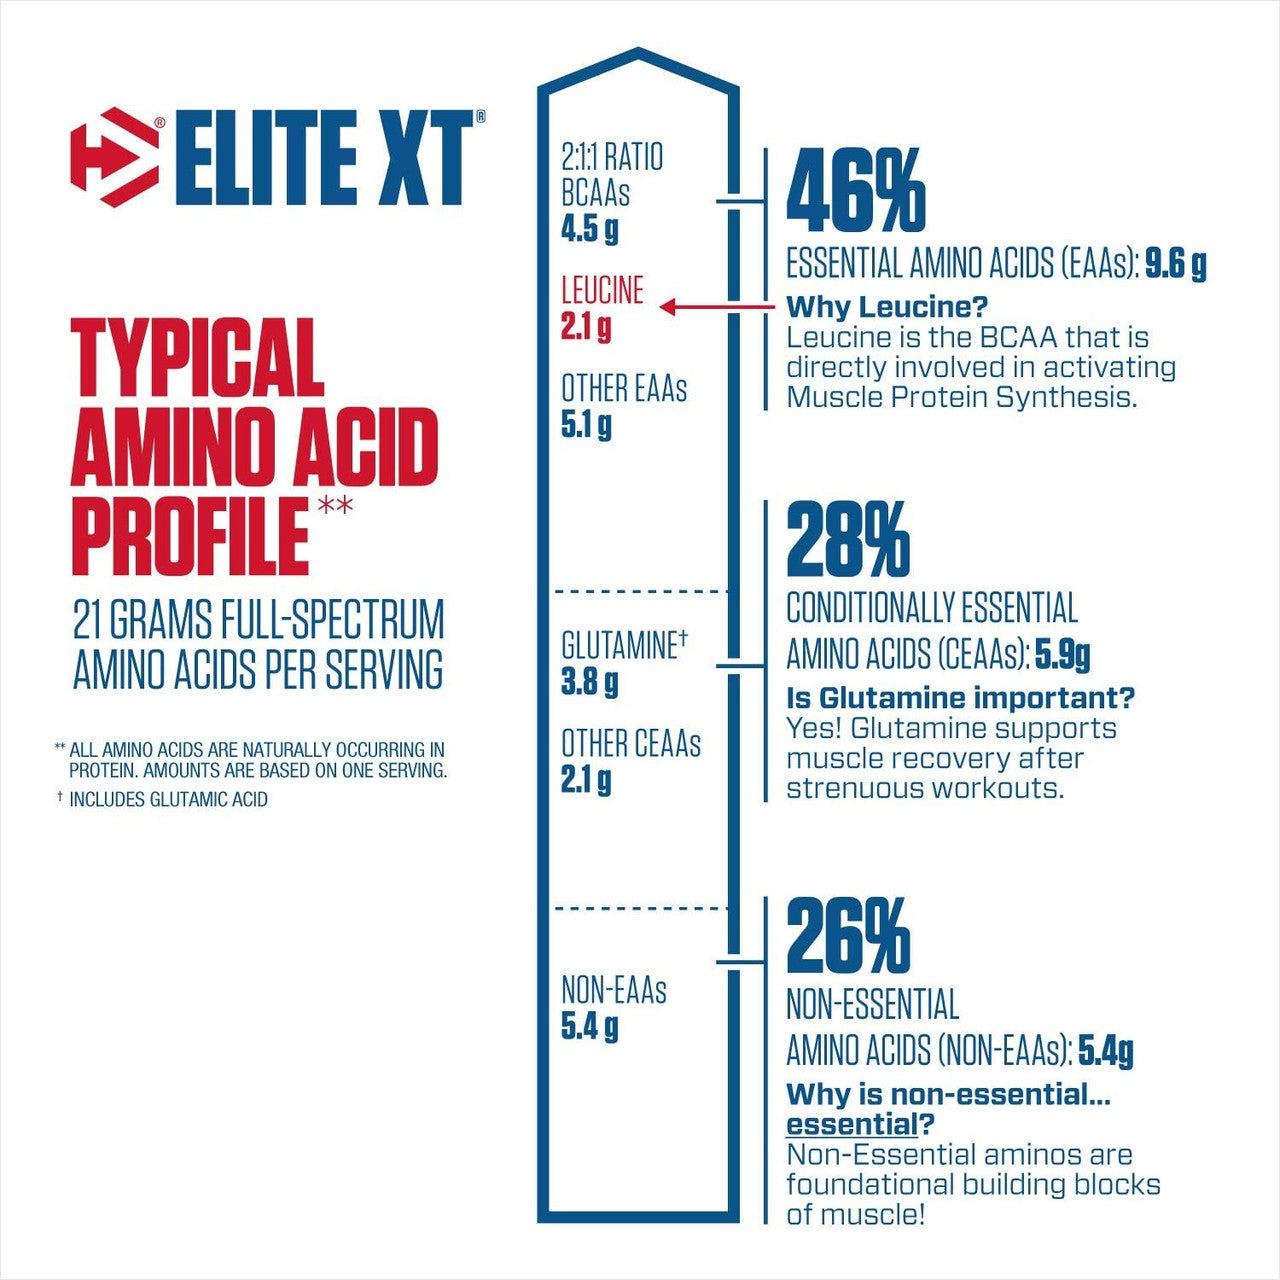 Dymatize Elite XT Protein Powder nutritional information